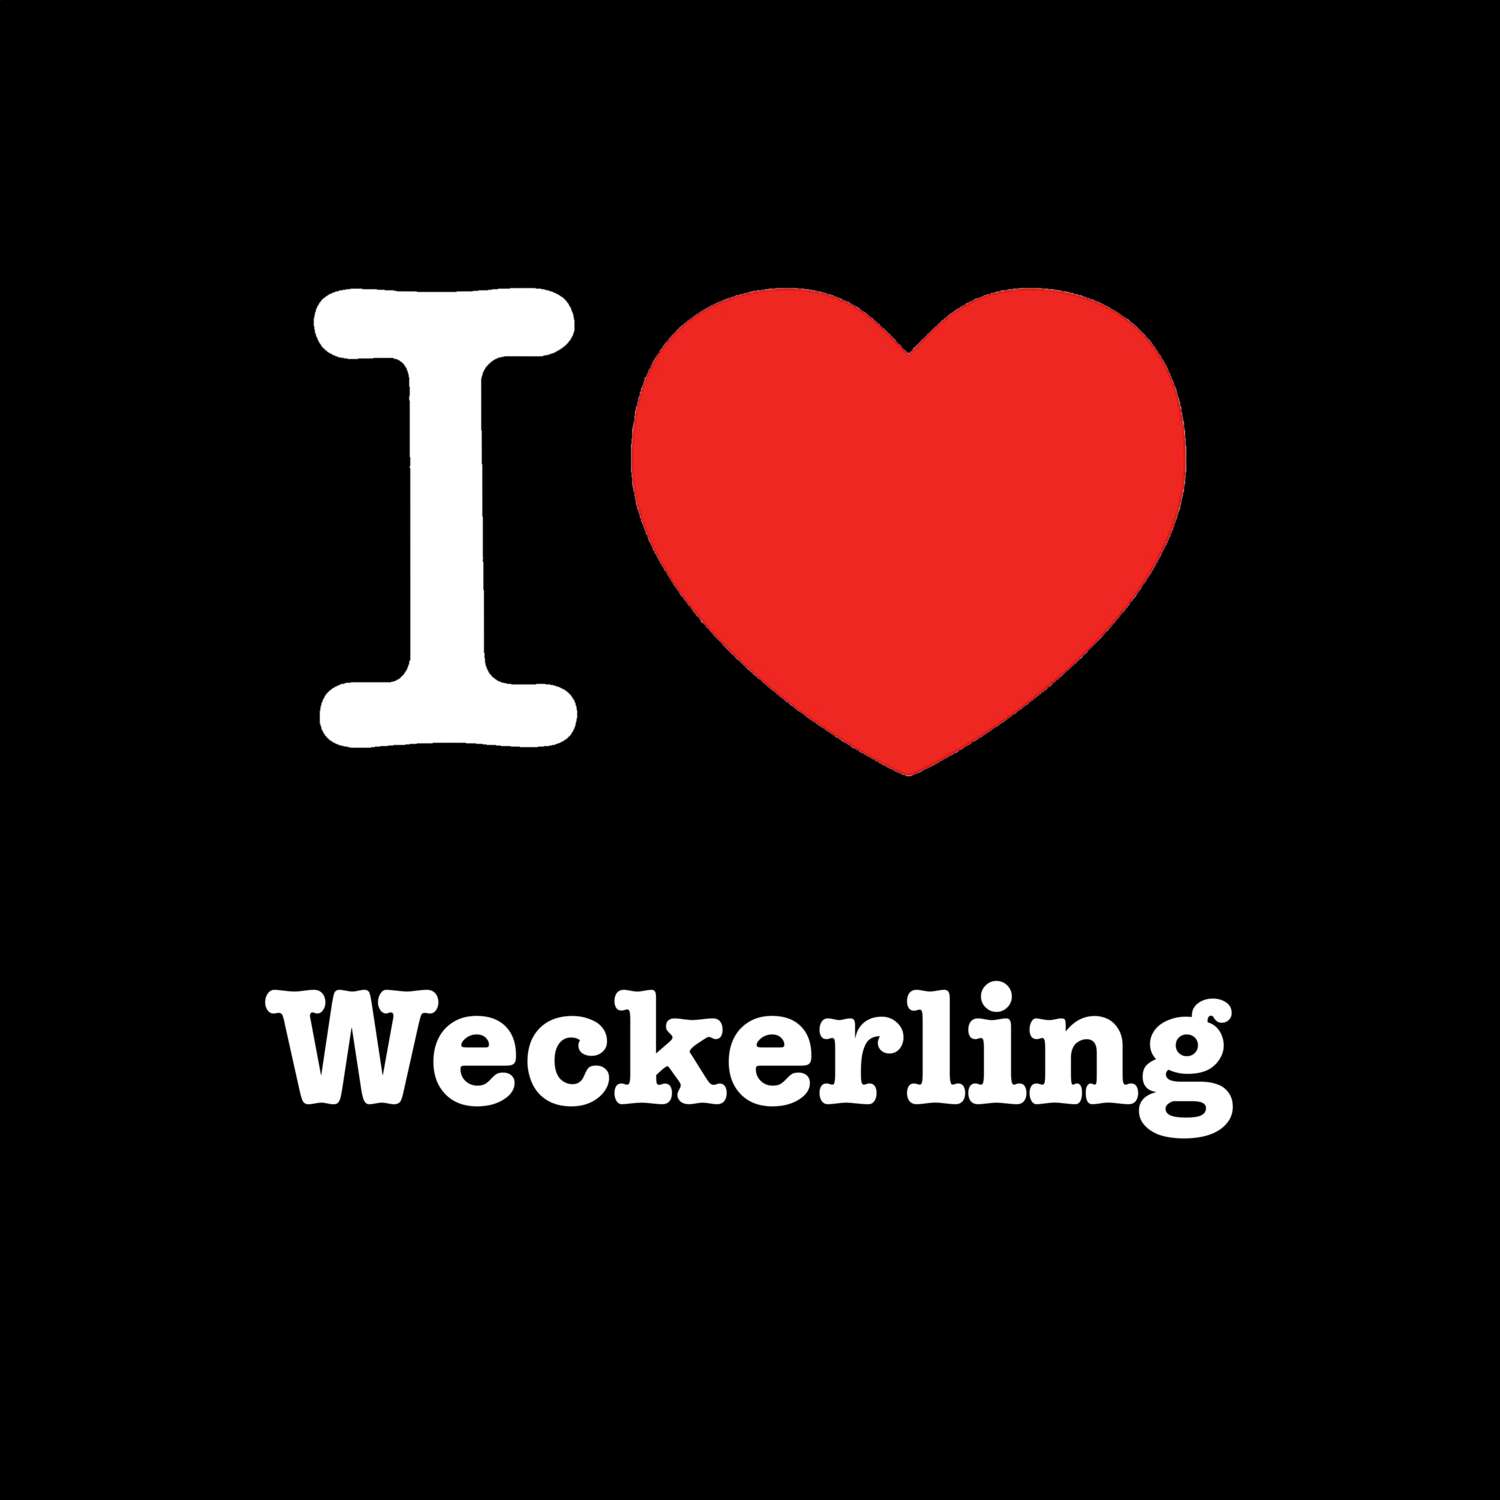 Weckerling T-Shirt »I love«